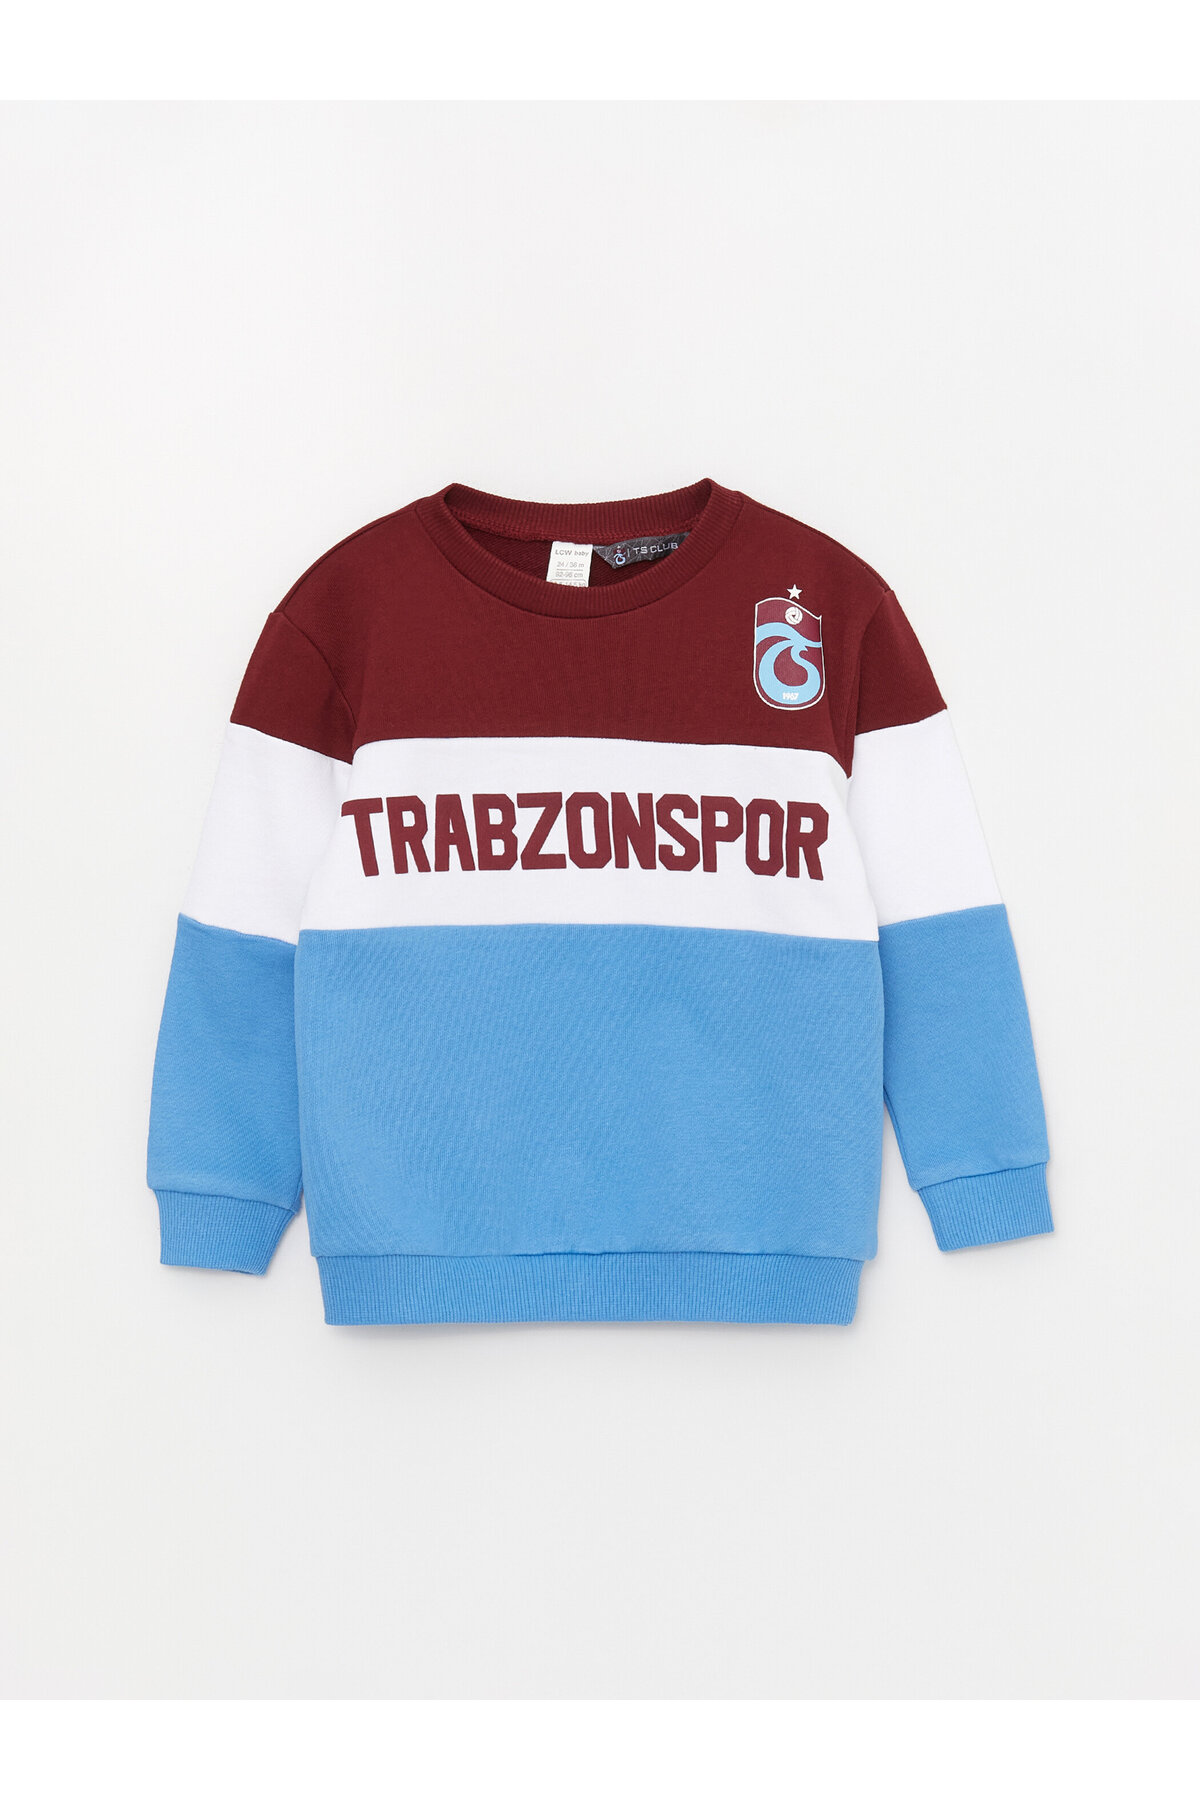 LC Waikiki Crew Neck Long Sleeve Trabzonspor Printed Baby Boy Sweatshirt